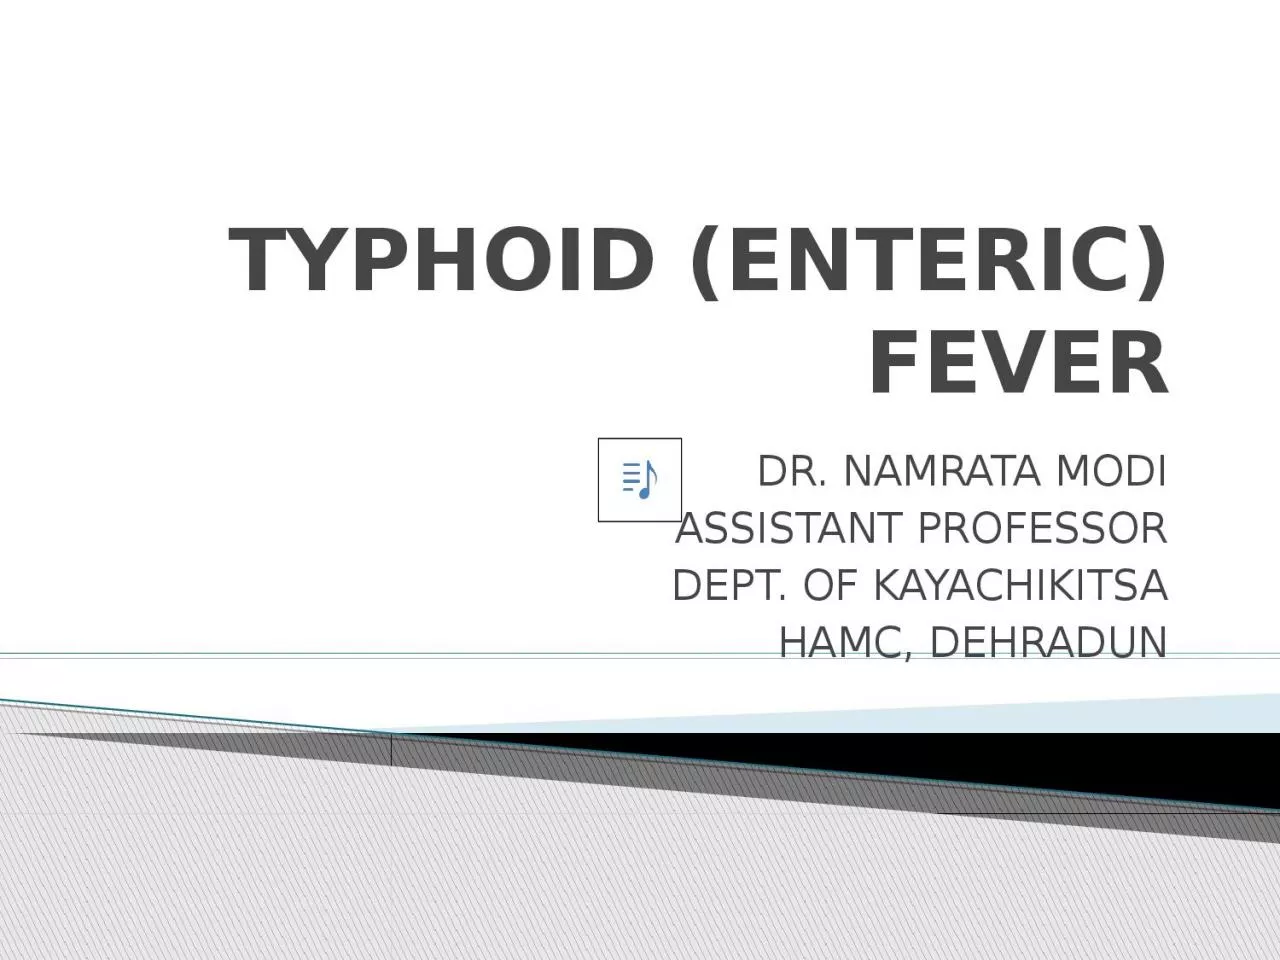 TYPHOID (ENTERIC) FEVER DR. NAMRATA MODI